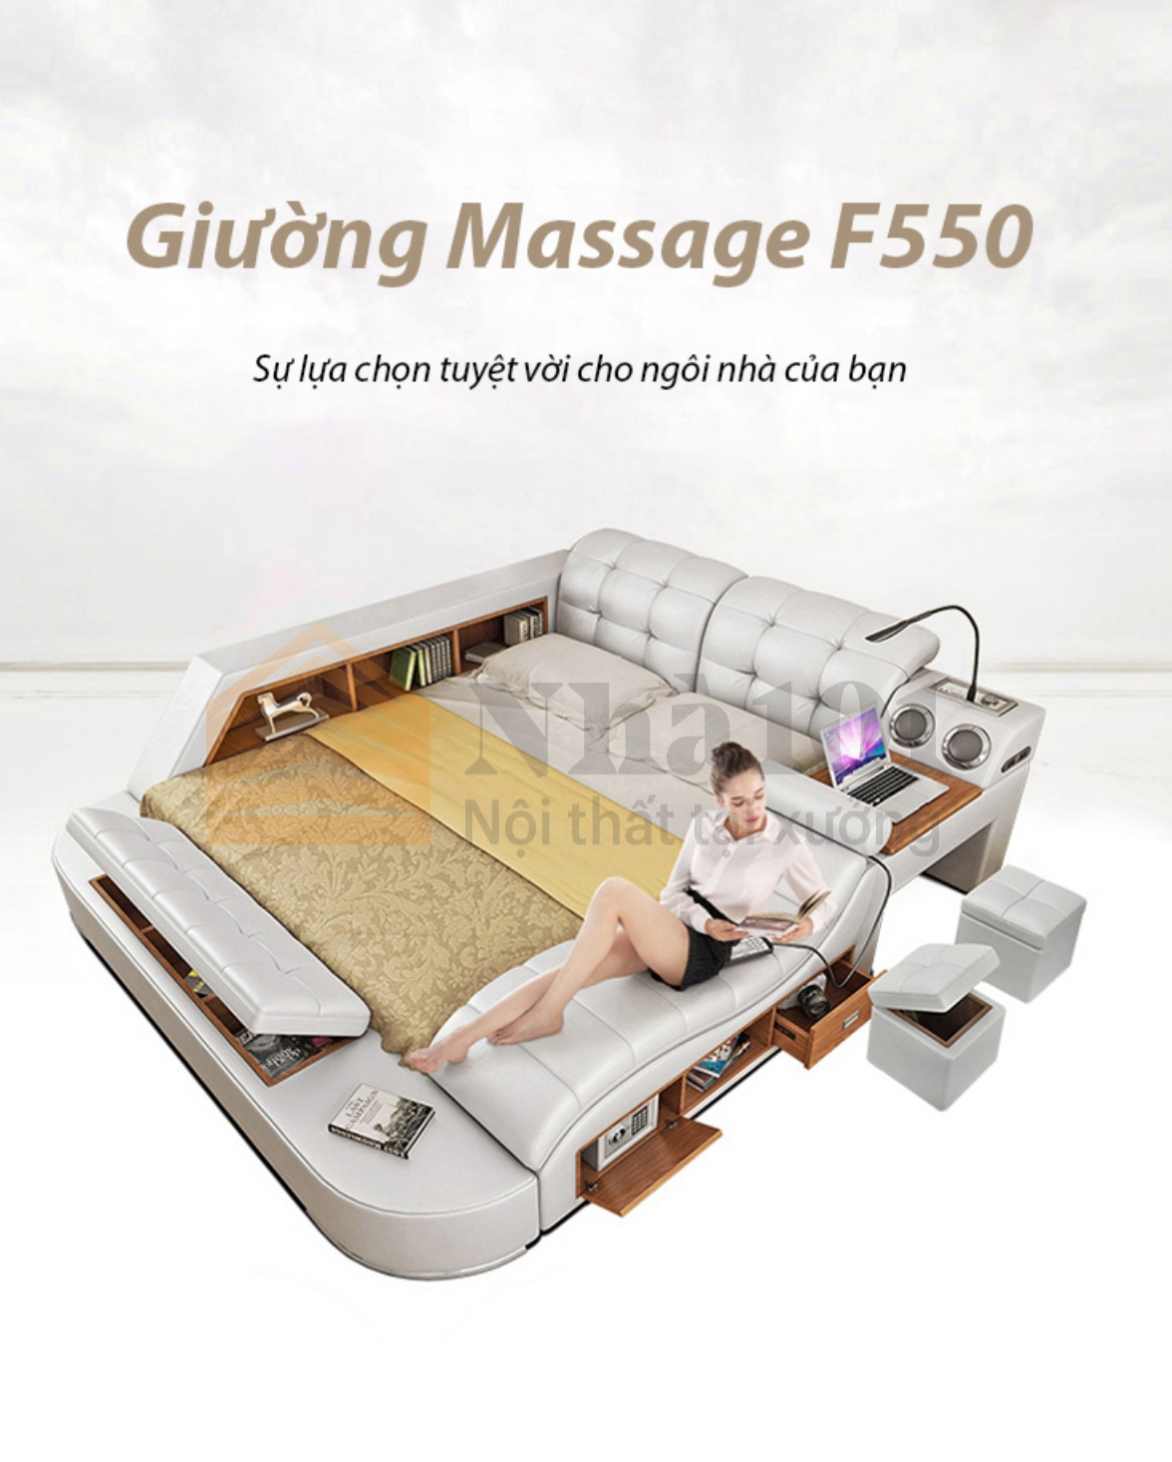 Giường Massage F550, giường massage, giường massage tiện nghi 1